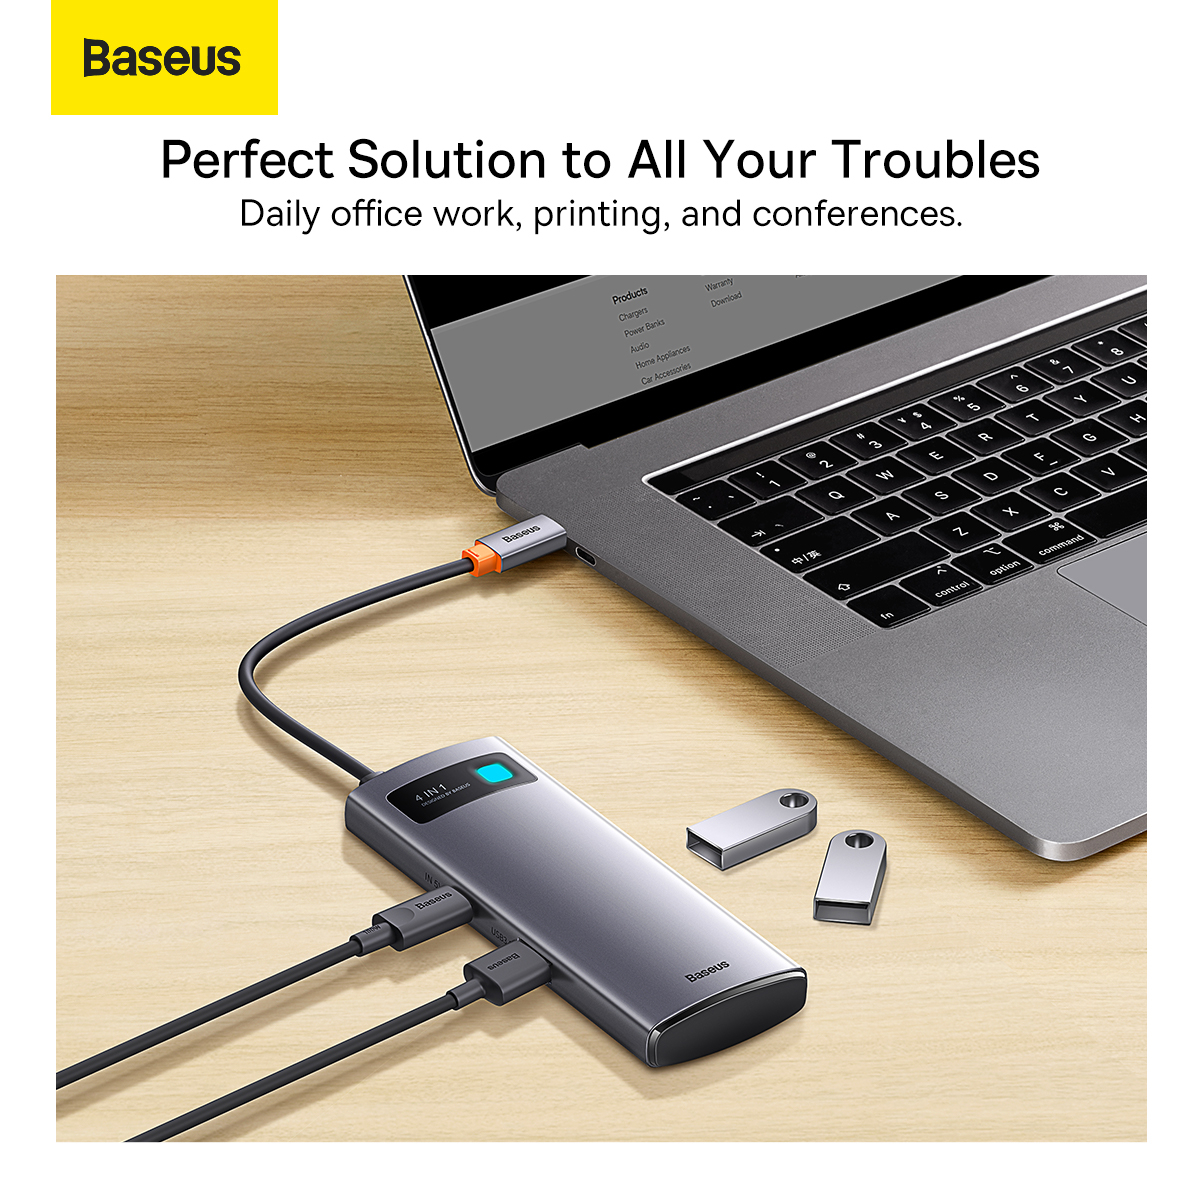 Baseus BS-OH066 Metal Gleam Series USB-C hubb, 4xUSB-A